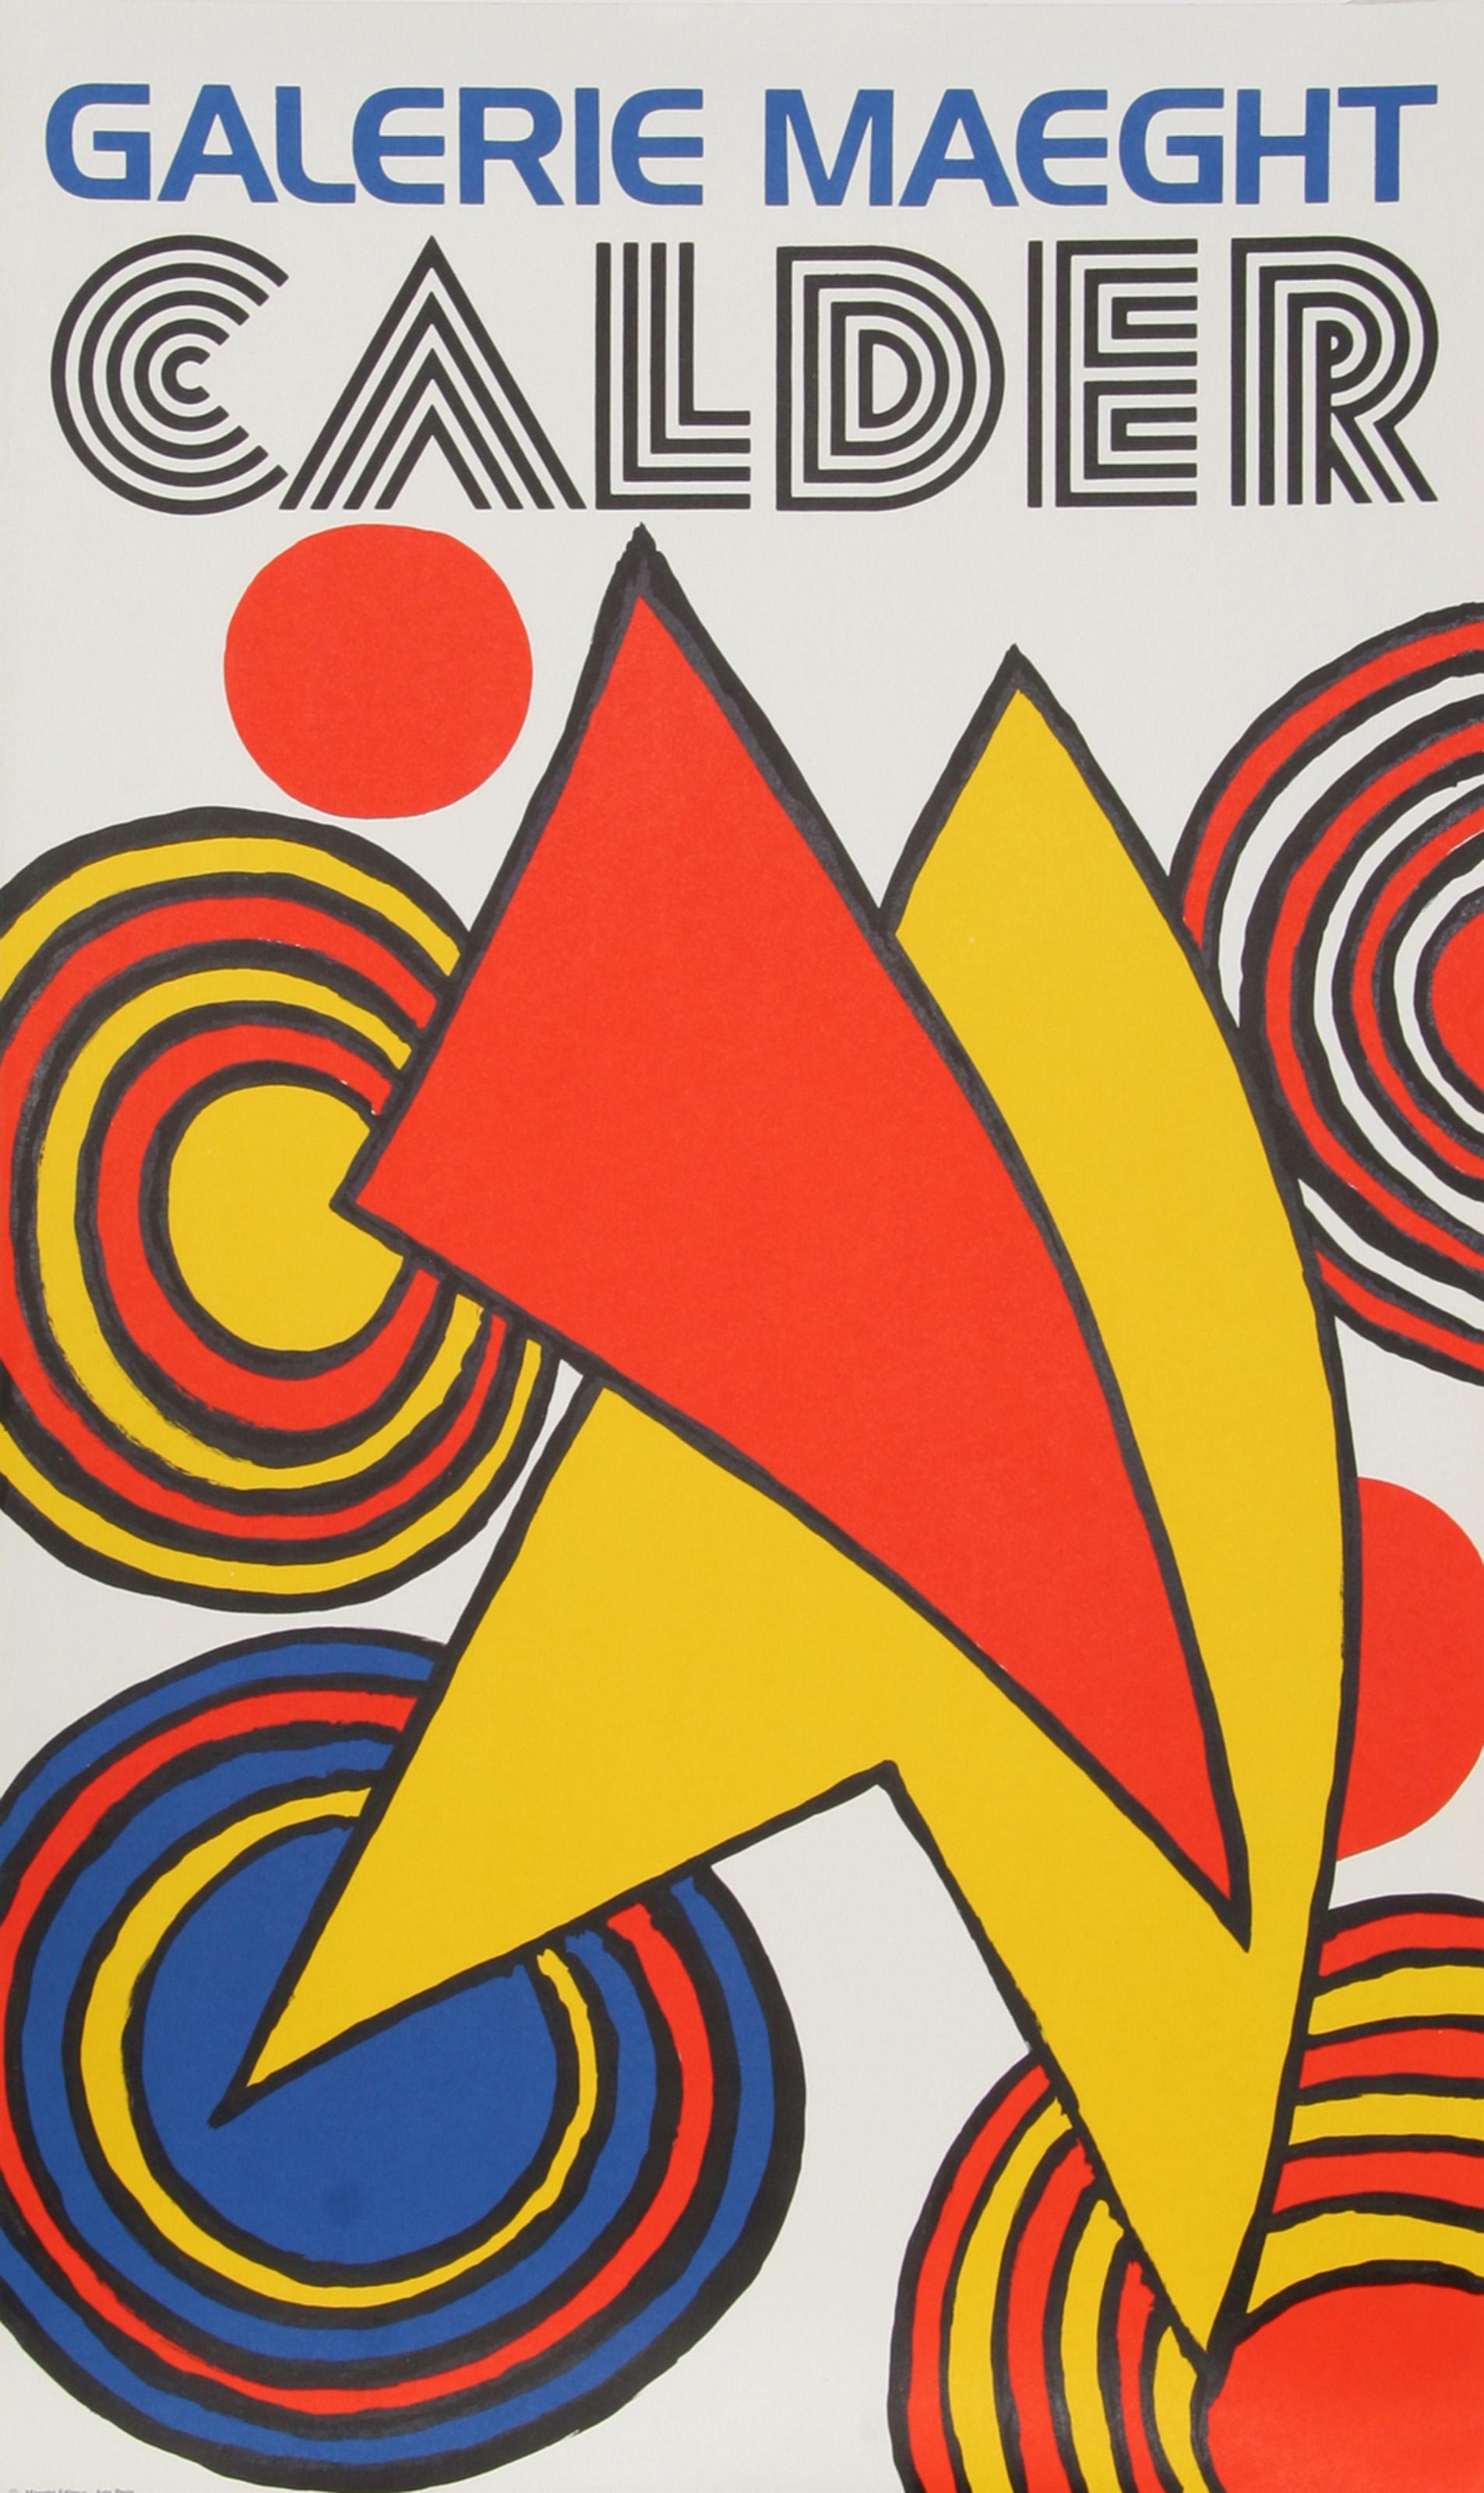 Alexander Calder, American (1898 - 1976) -  Galerie Maeght. Year: circa 1970, Medium: Lithograph Poster, Size: 31 in. x 19 in. (78.74 cm x 48.26 cm), Printer: Arte Adrien Maeght, Publisher: Arte Adrien Maeght 